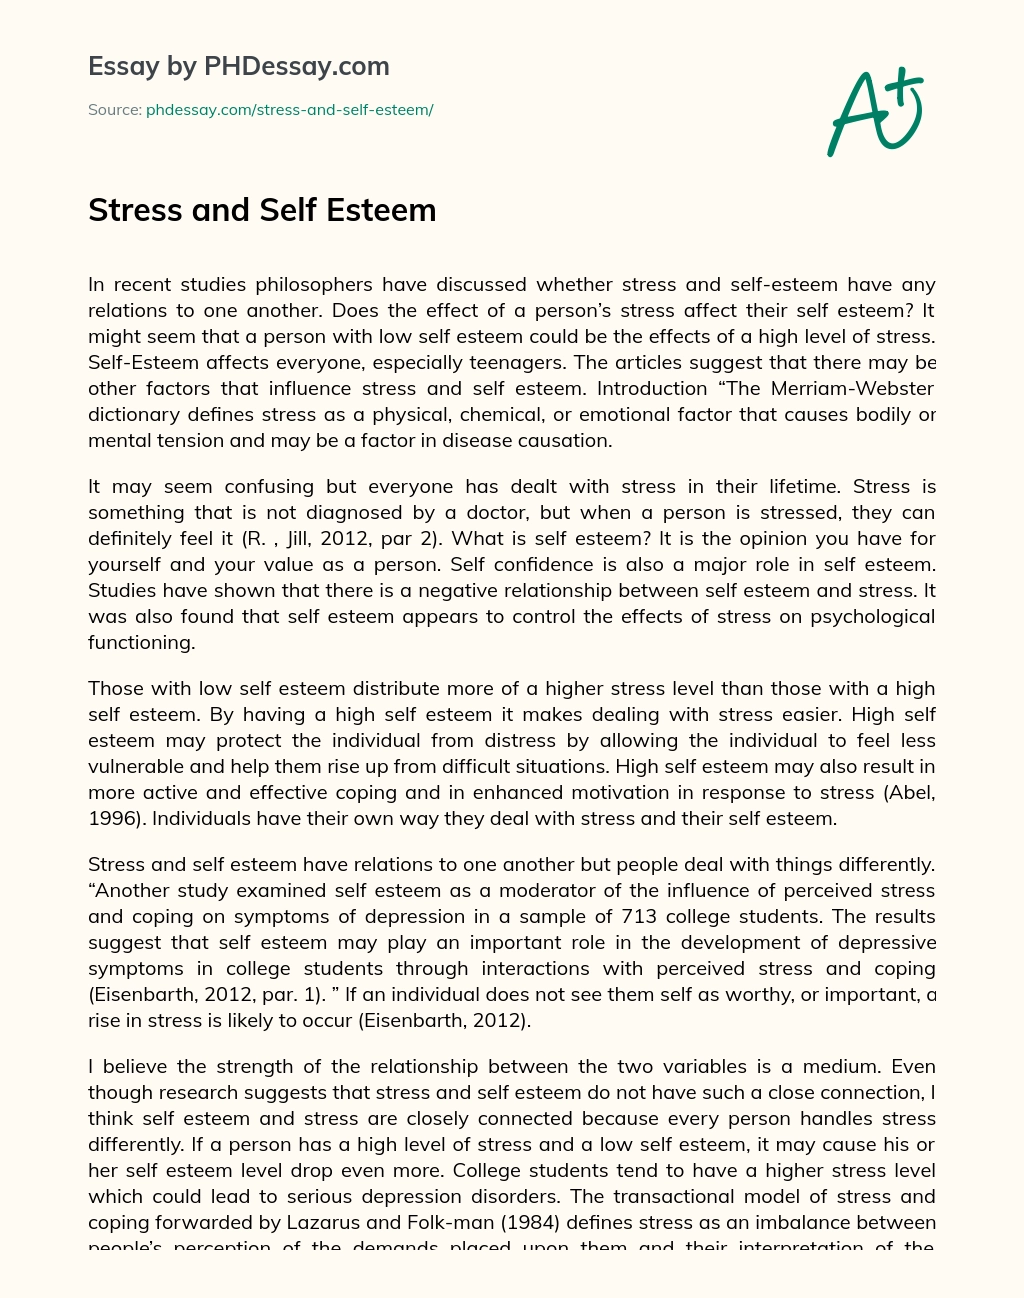 Stress and Self Esteem essay